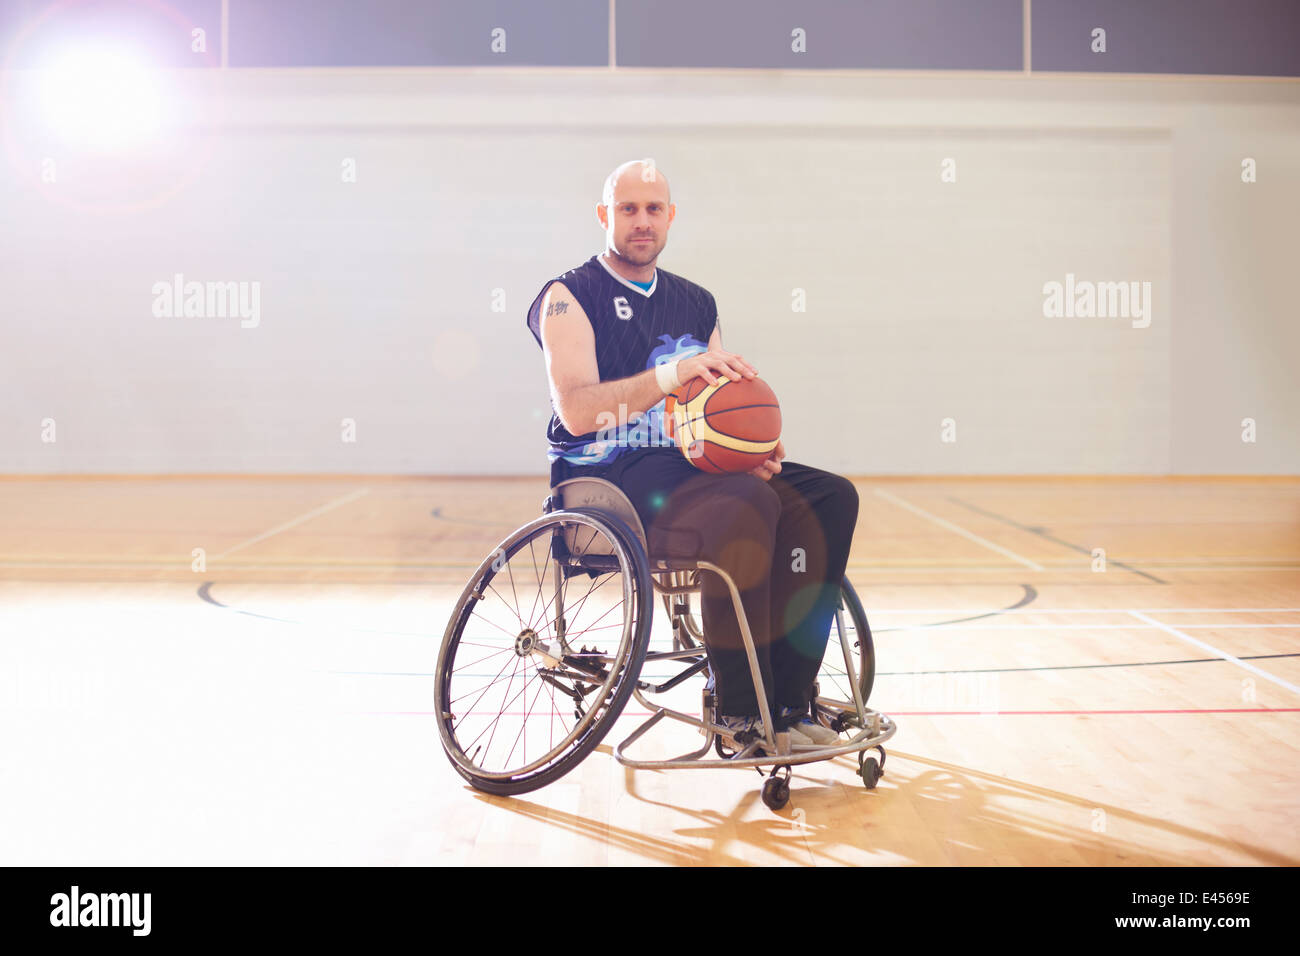 Rollstuhl Basketball Spieler halten ball Stockfoto